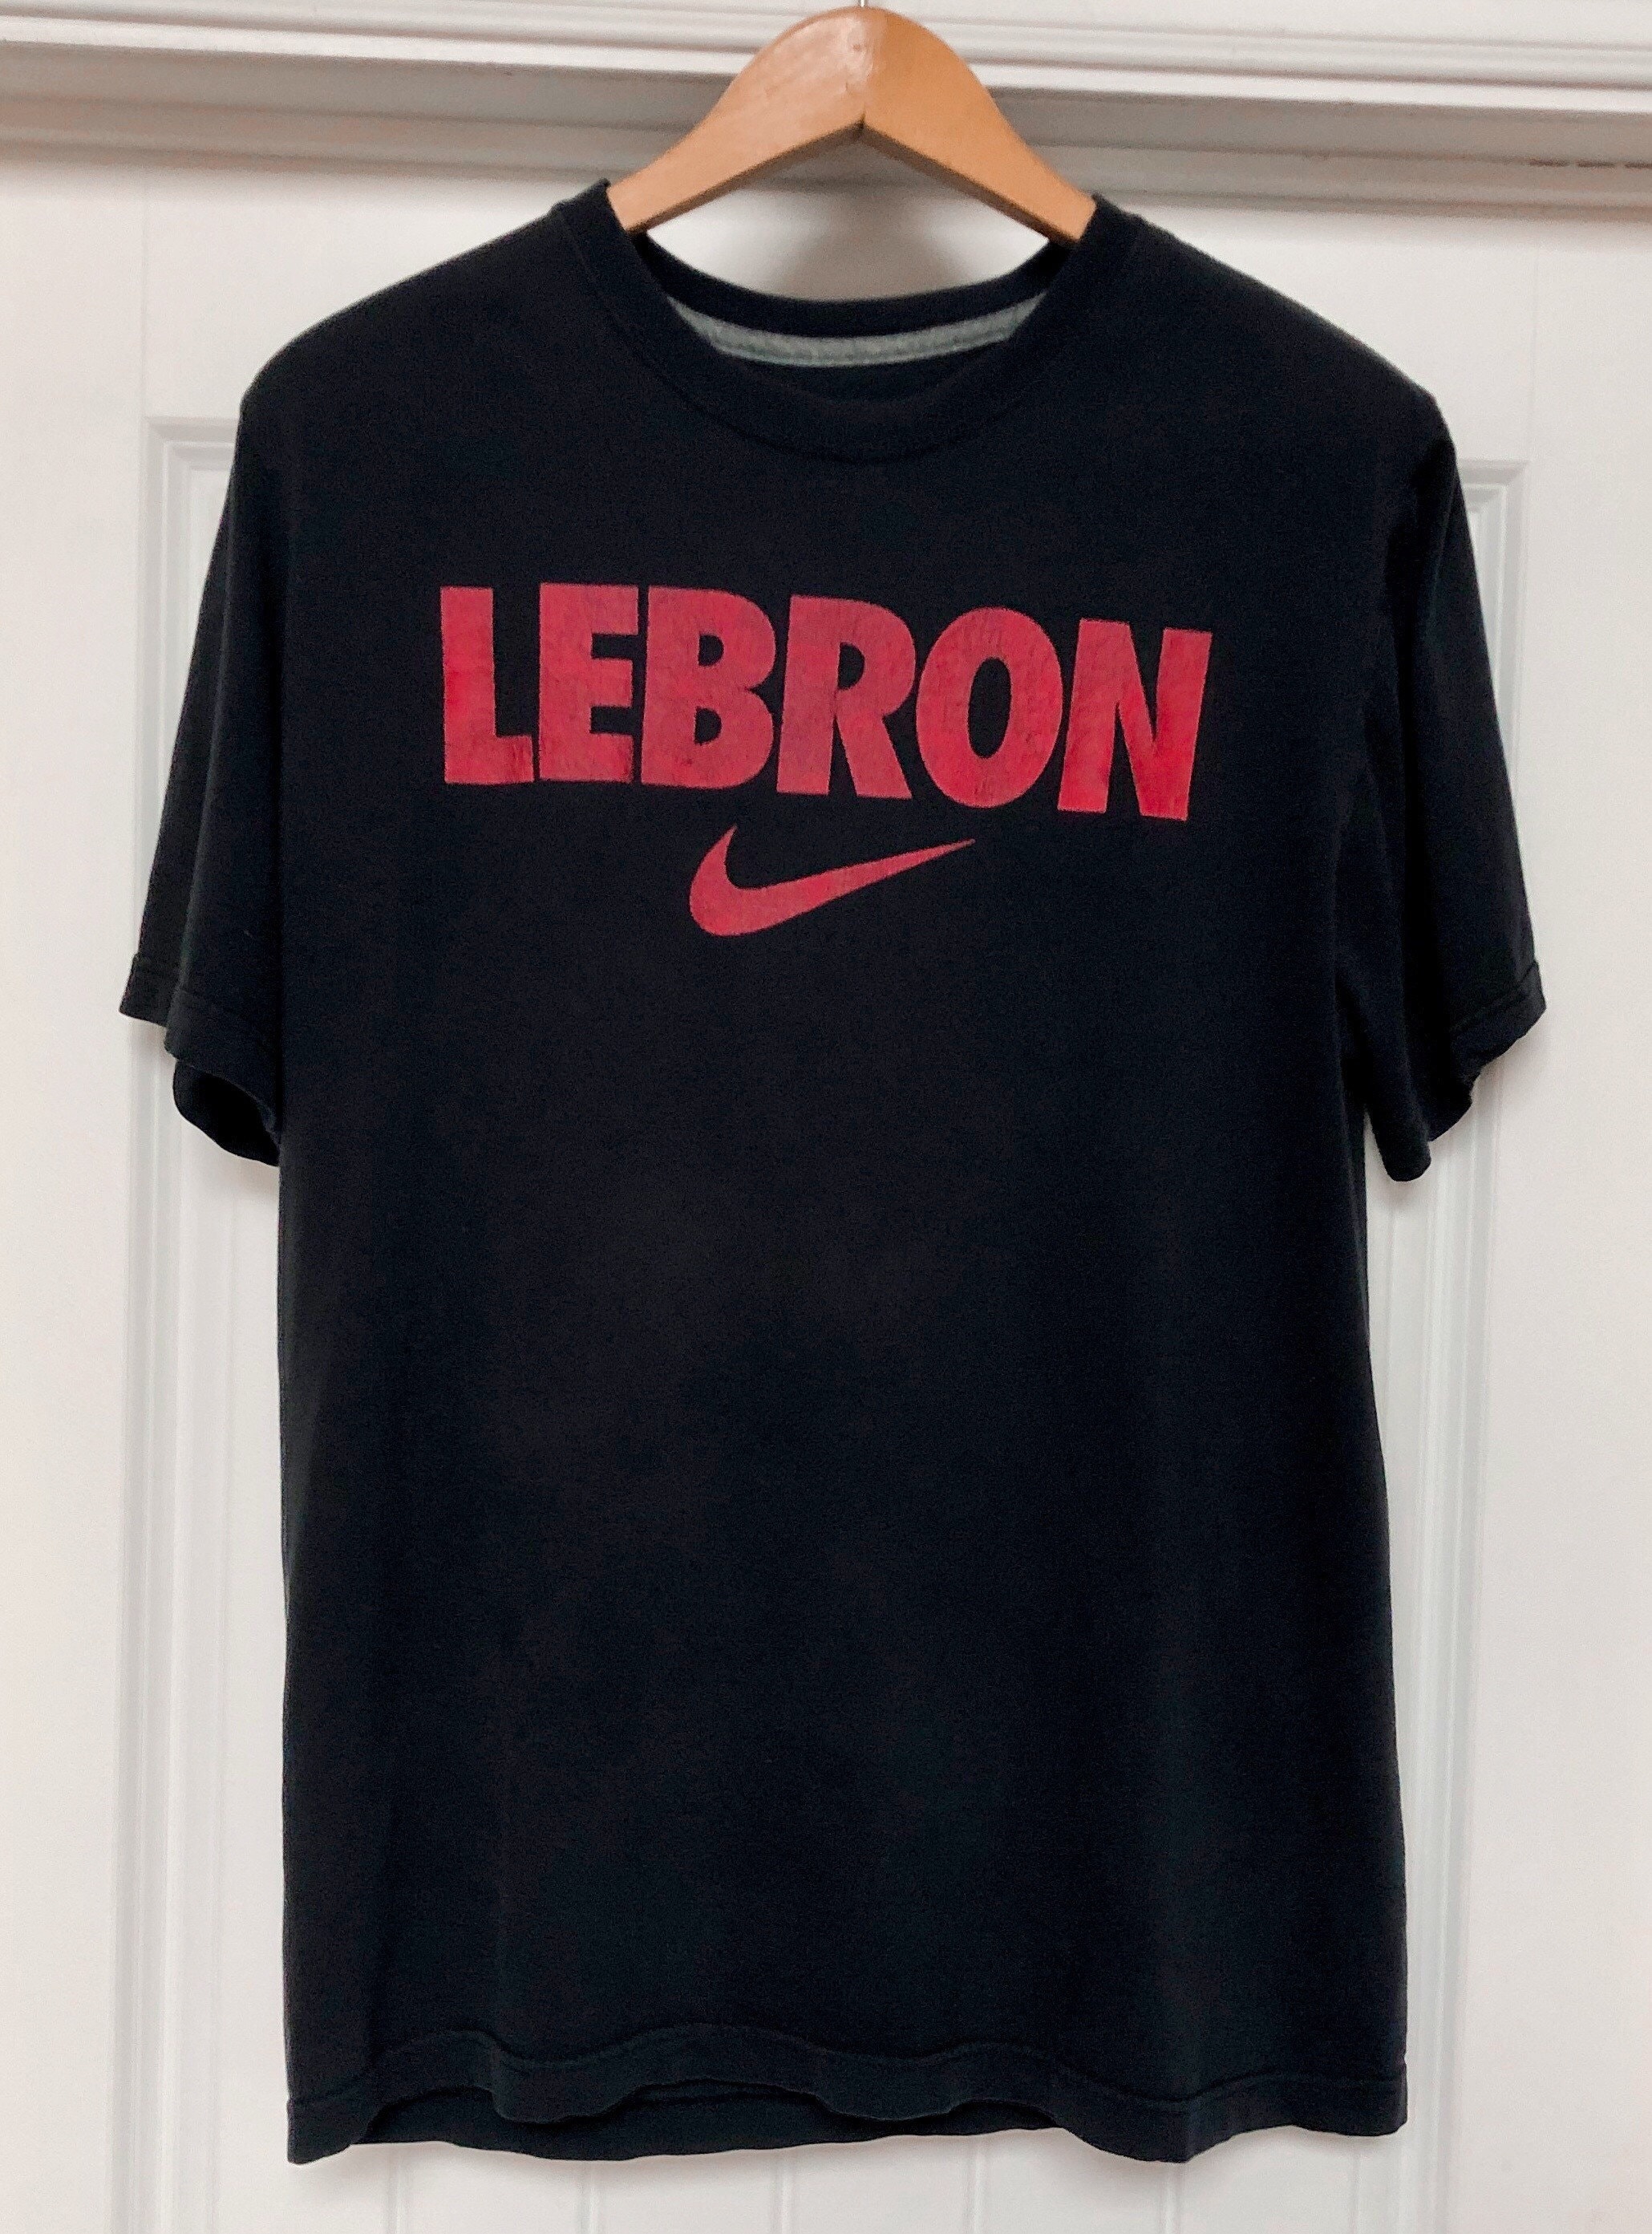 LeBron 19 Leopard Grey Matching Custom Designed T shirt / hoodie NLB19  1-3-16